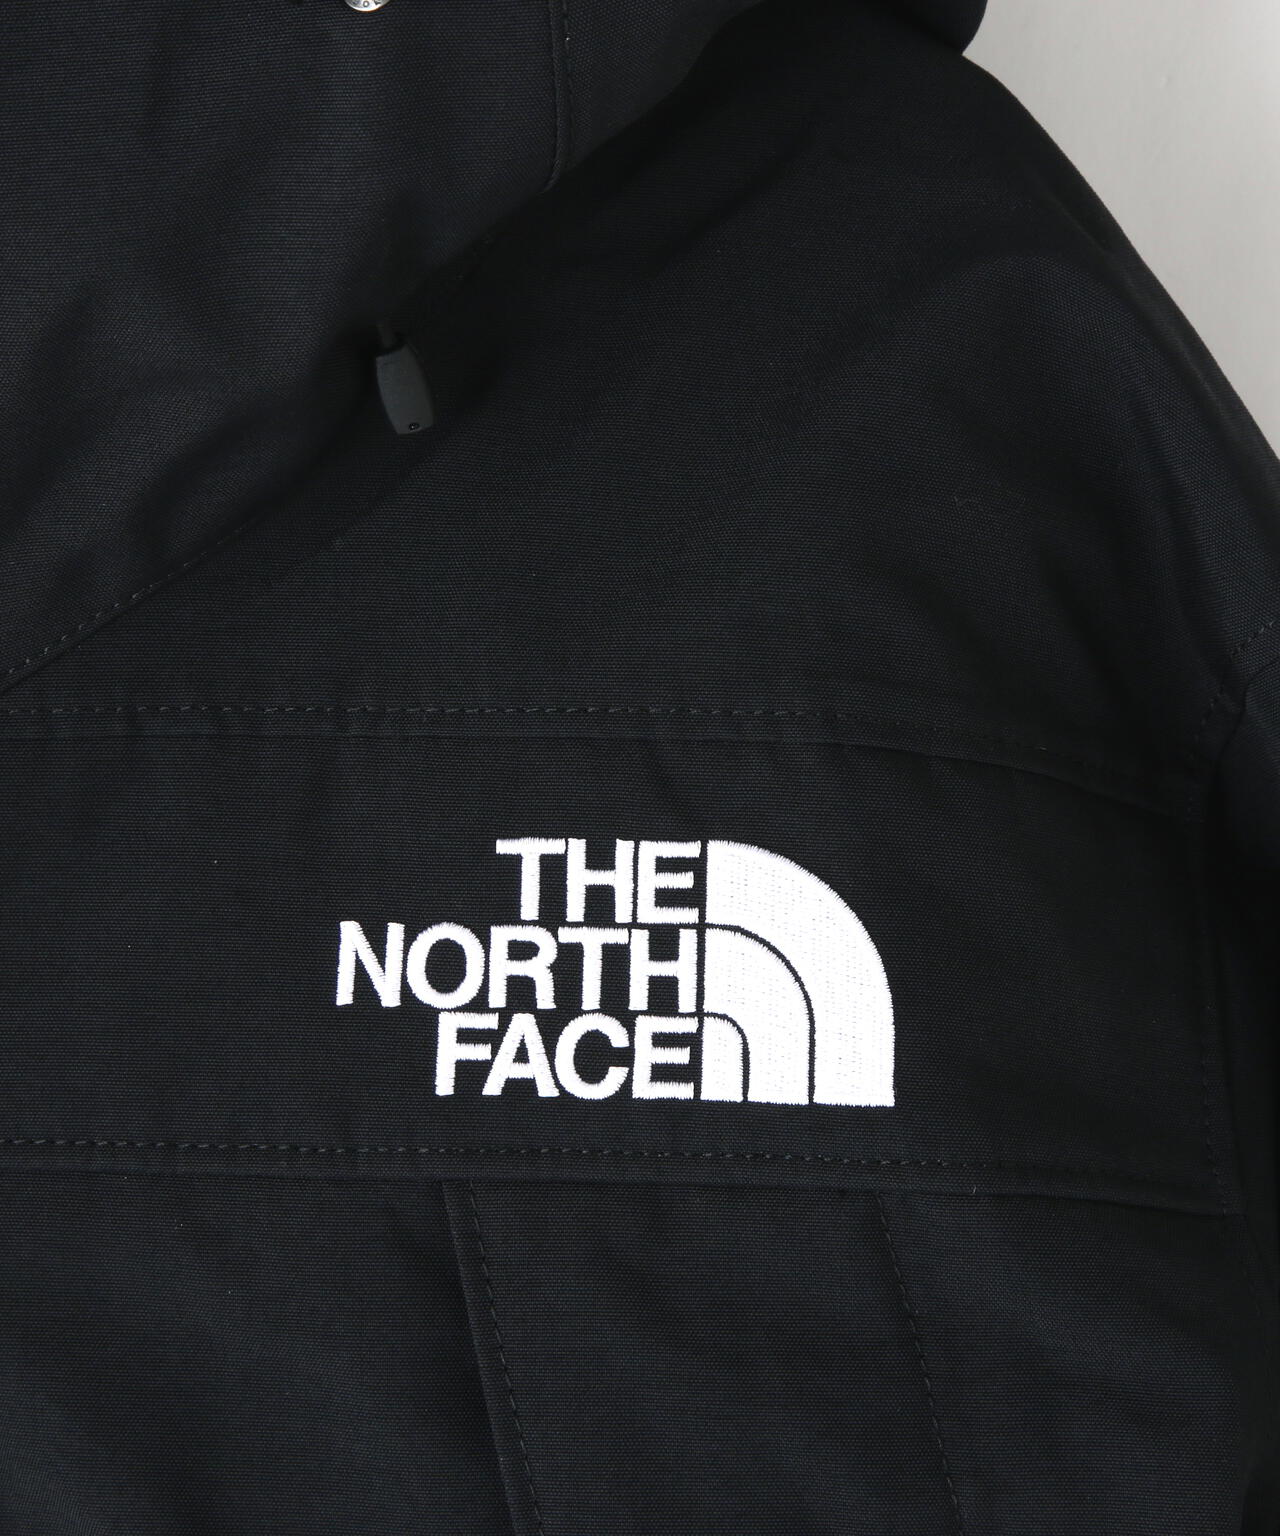 THE NORTH FACE/ザ・ノースフェイス/Antarctica Parka/アンターク